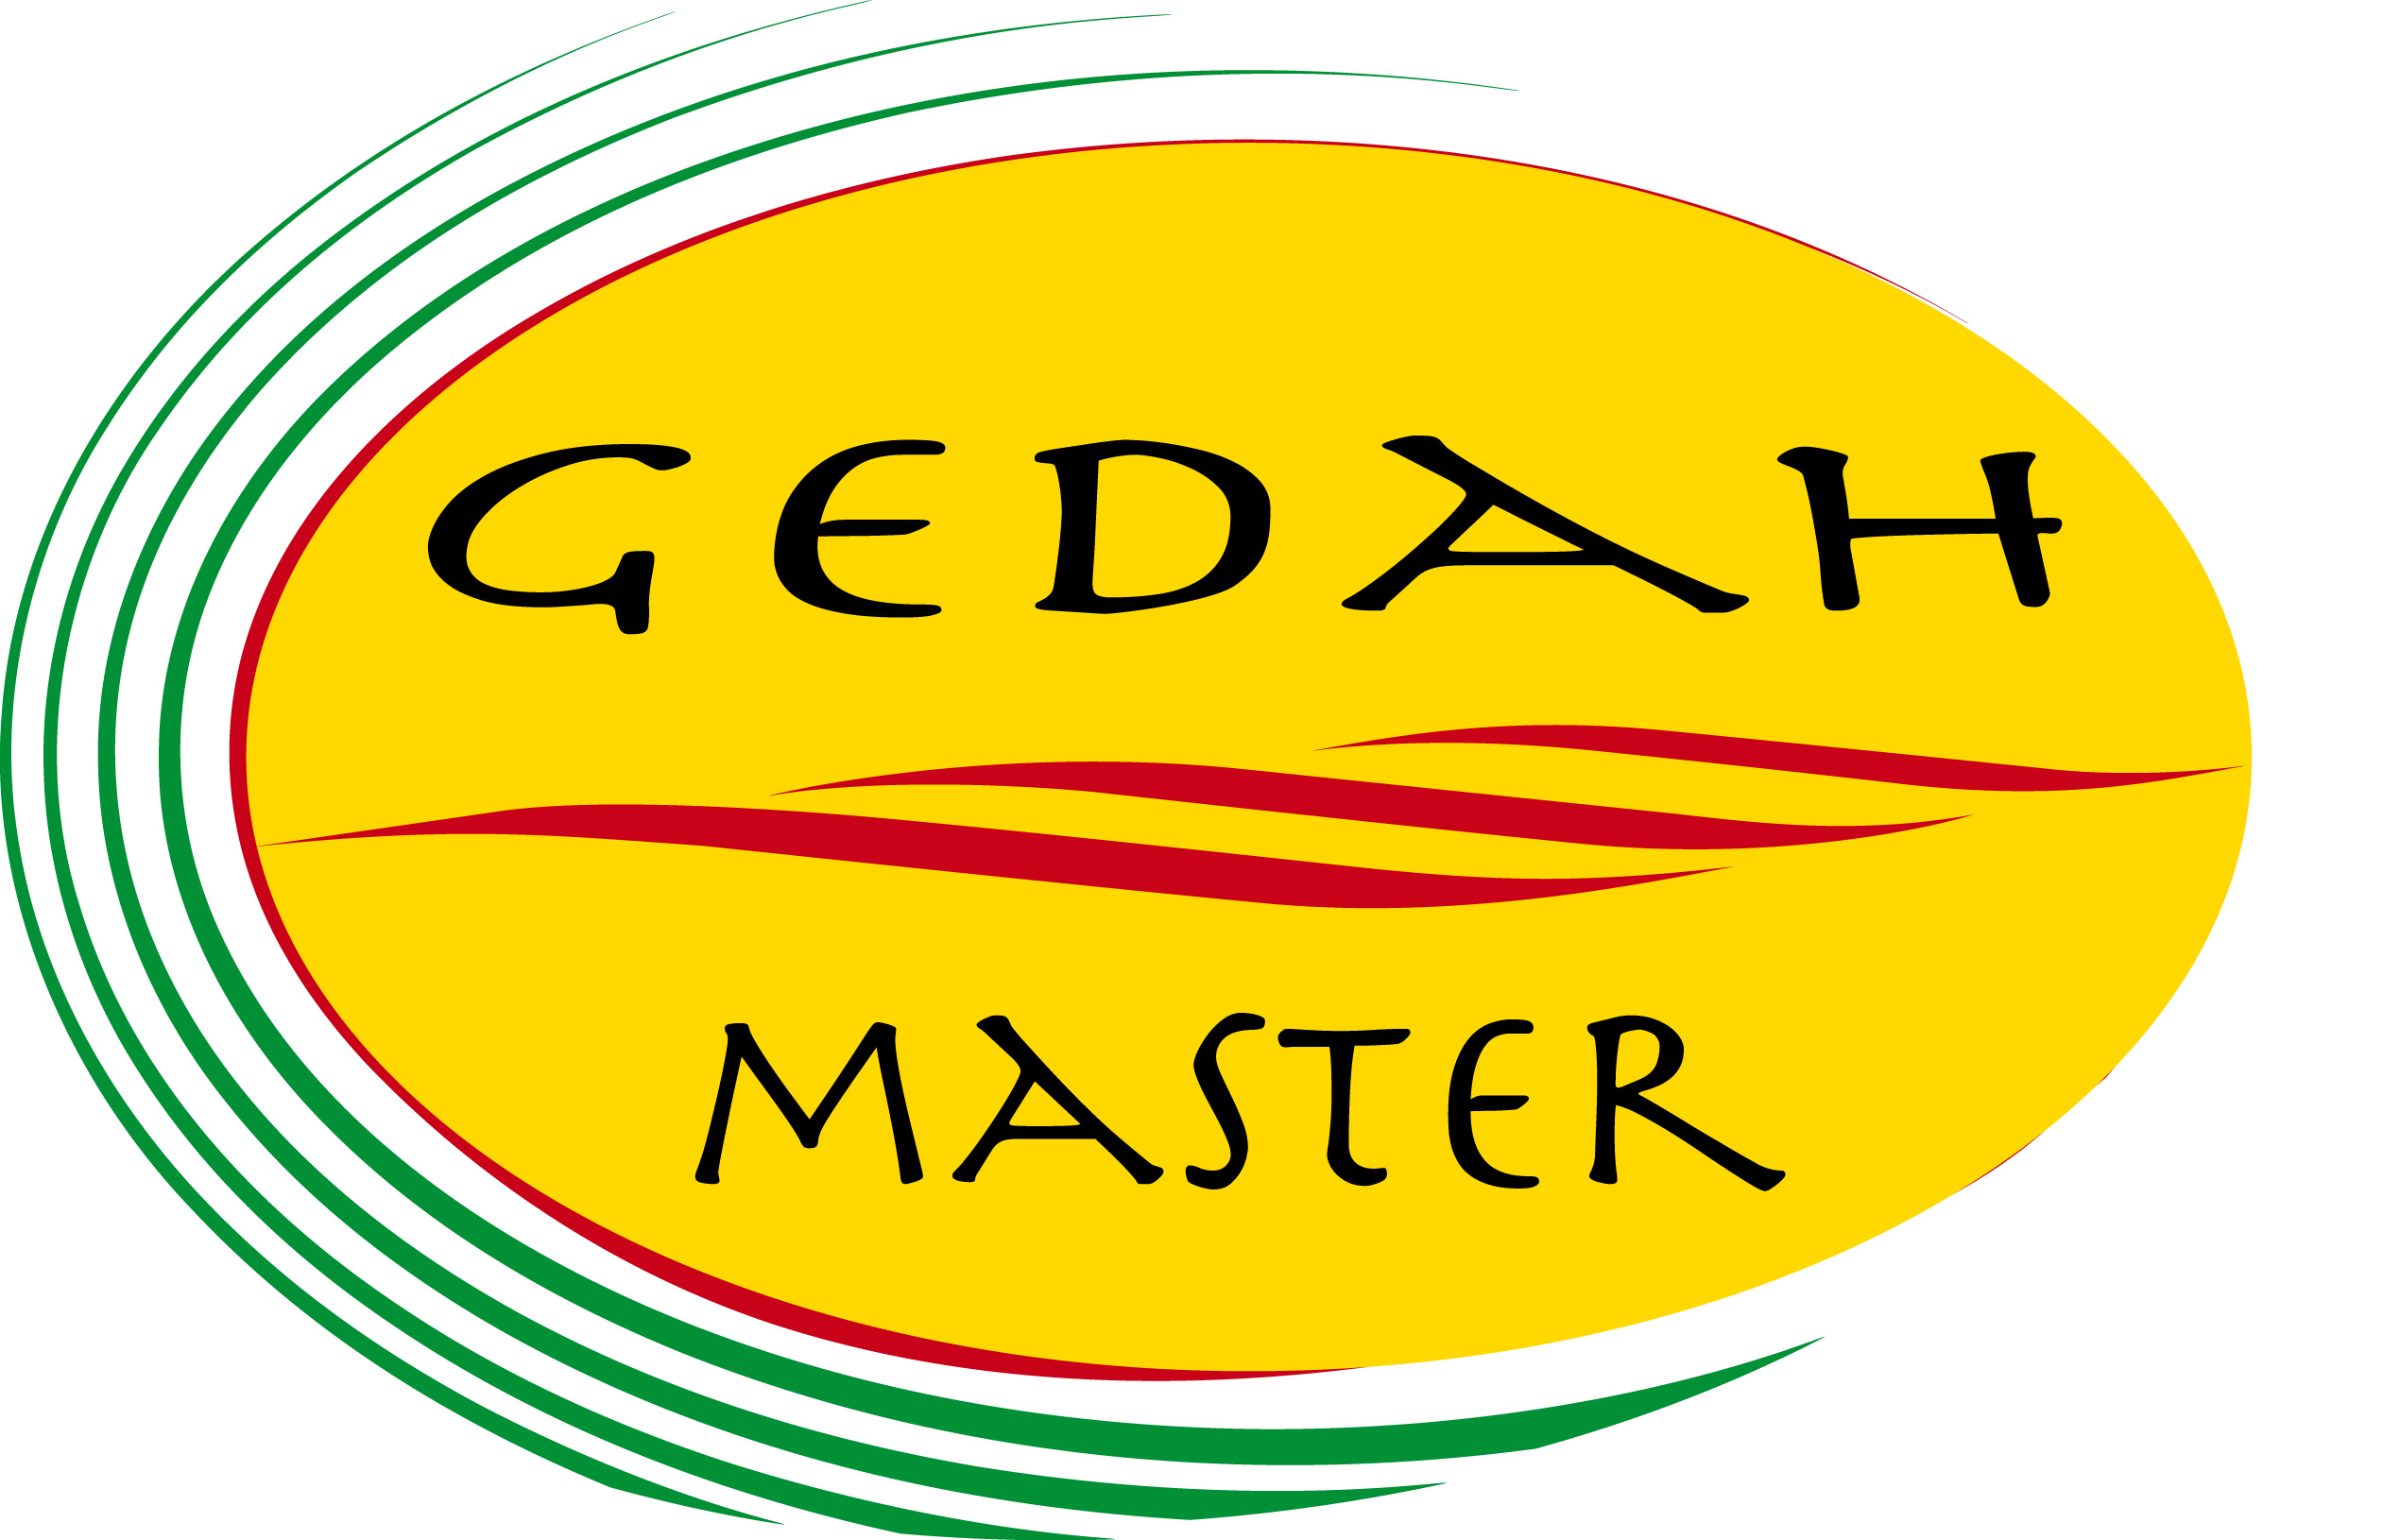 Master GEDAH